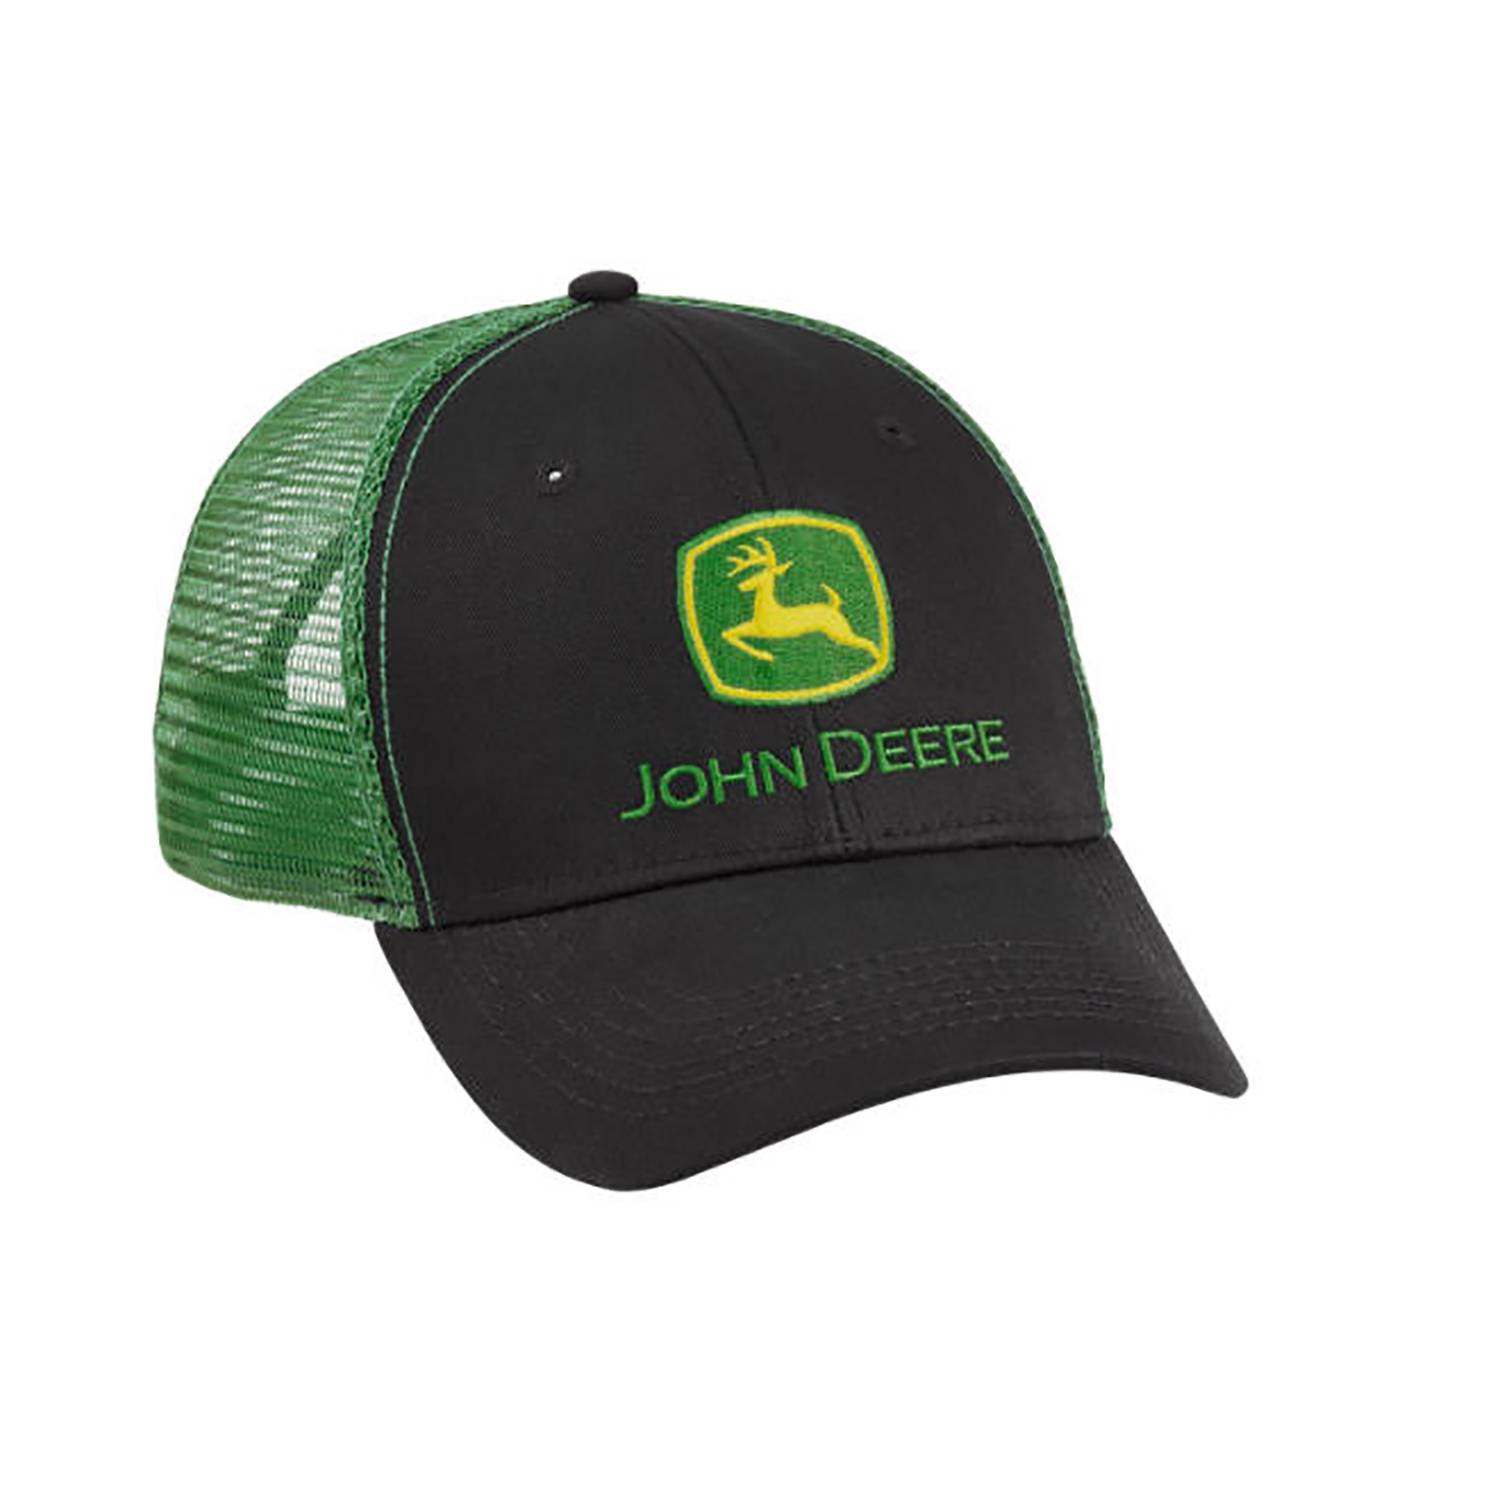 JOHN ASHFORD Gorro Jockey John Deere Original Gorra Trucker Con Malla